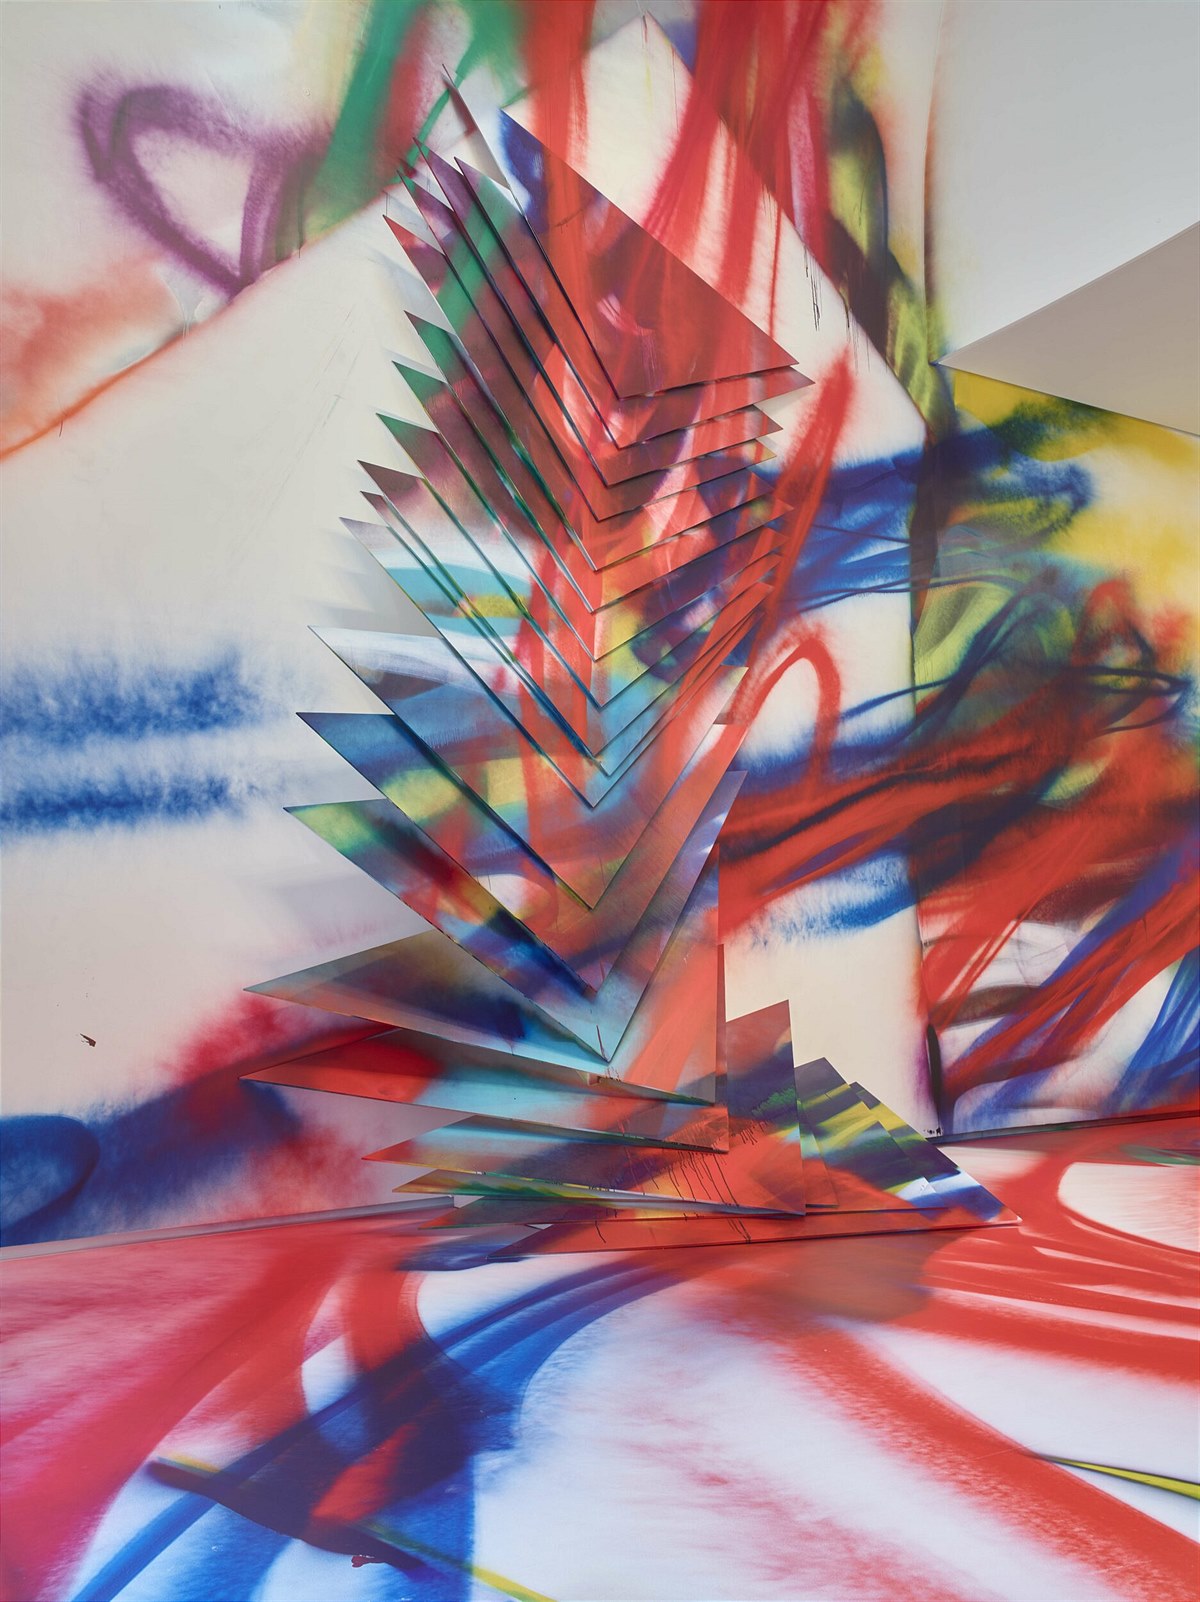 Fondation Louis Vuitton, exhibition Fugues in Color_Katharina Grosse, Splinter, 2022 (4)